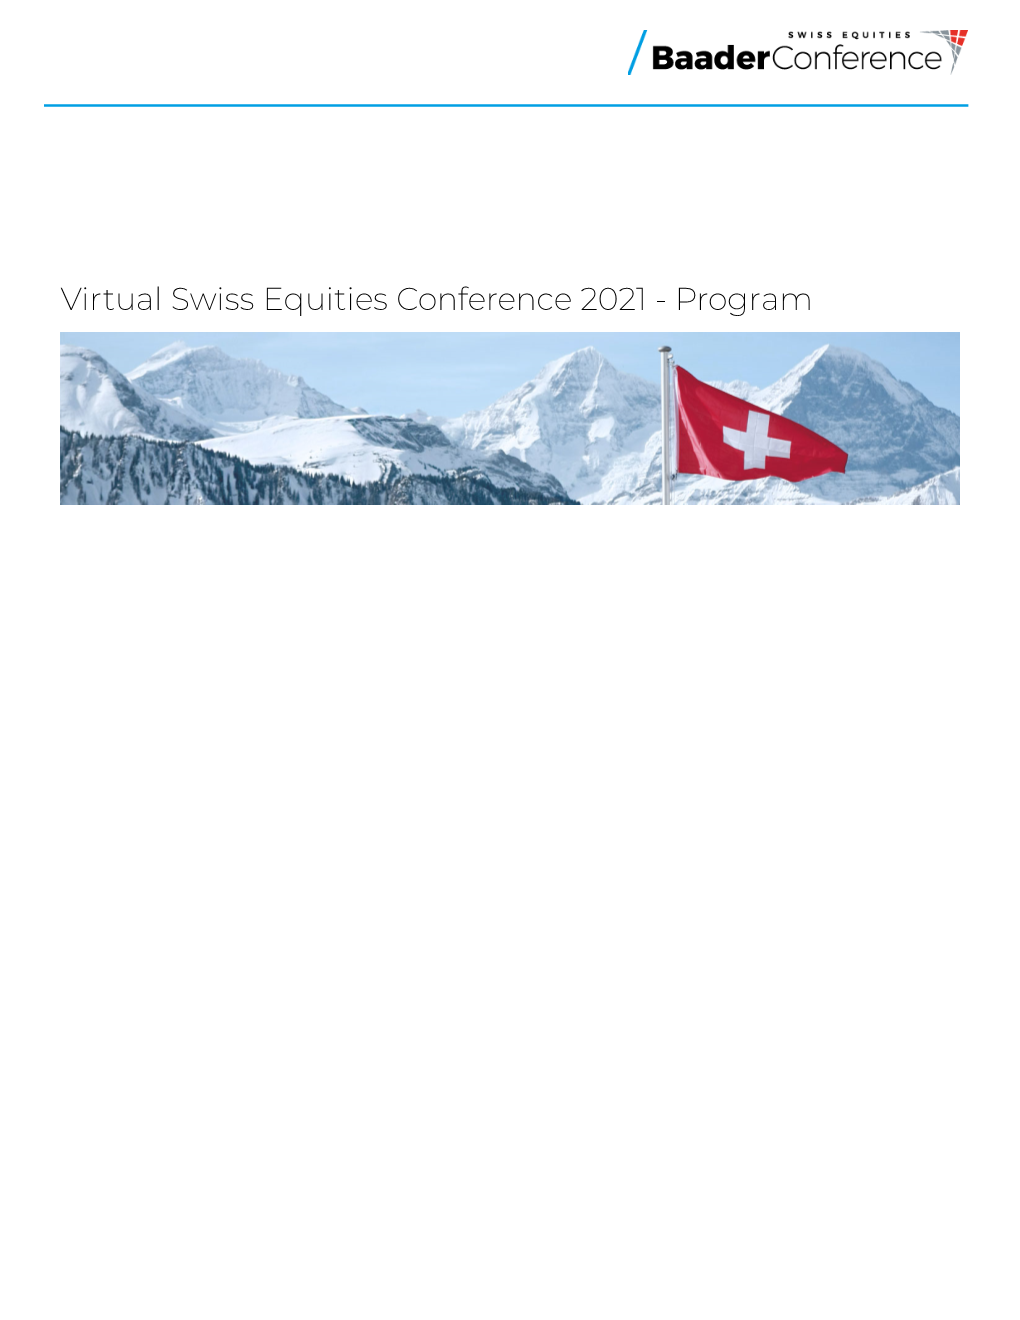 Virtual Swiss Equities Conference 2021 - Program 13 January 2021